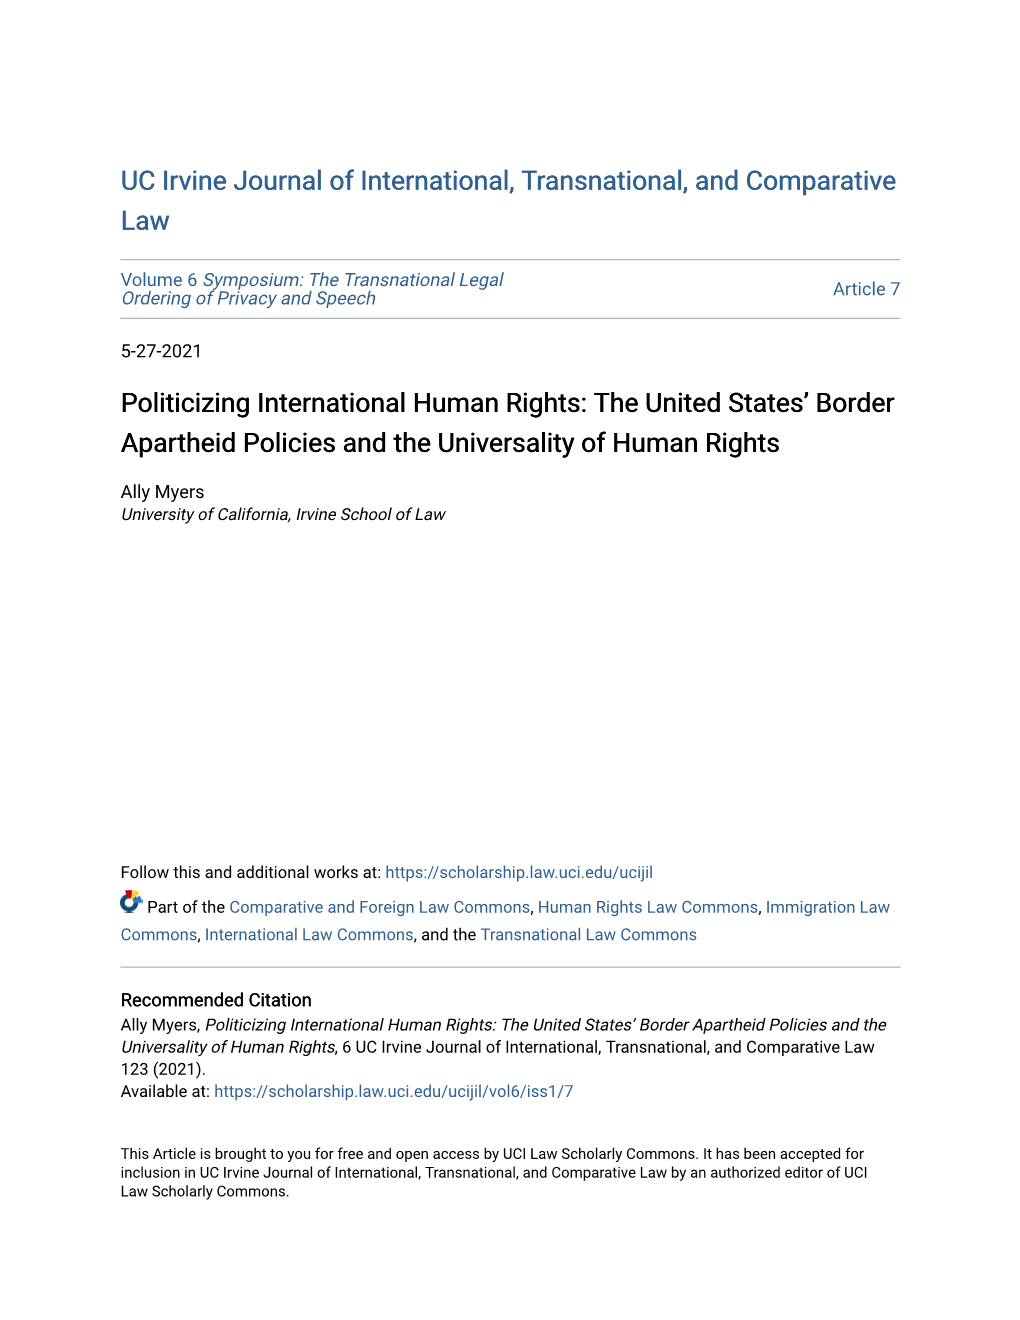 Politicizing International Human Rights: the United States' Border